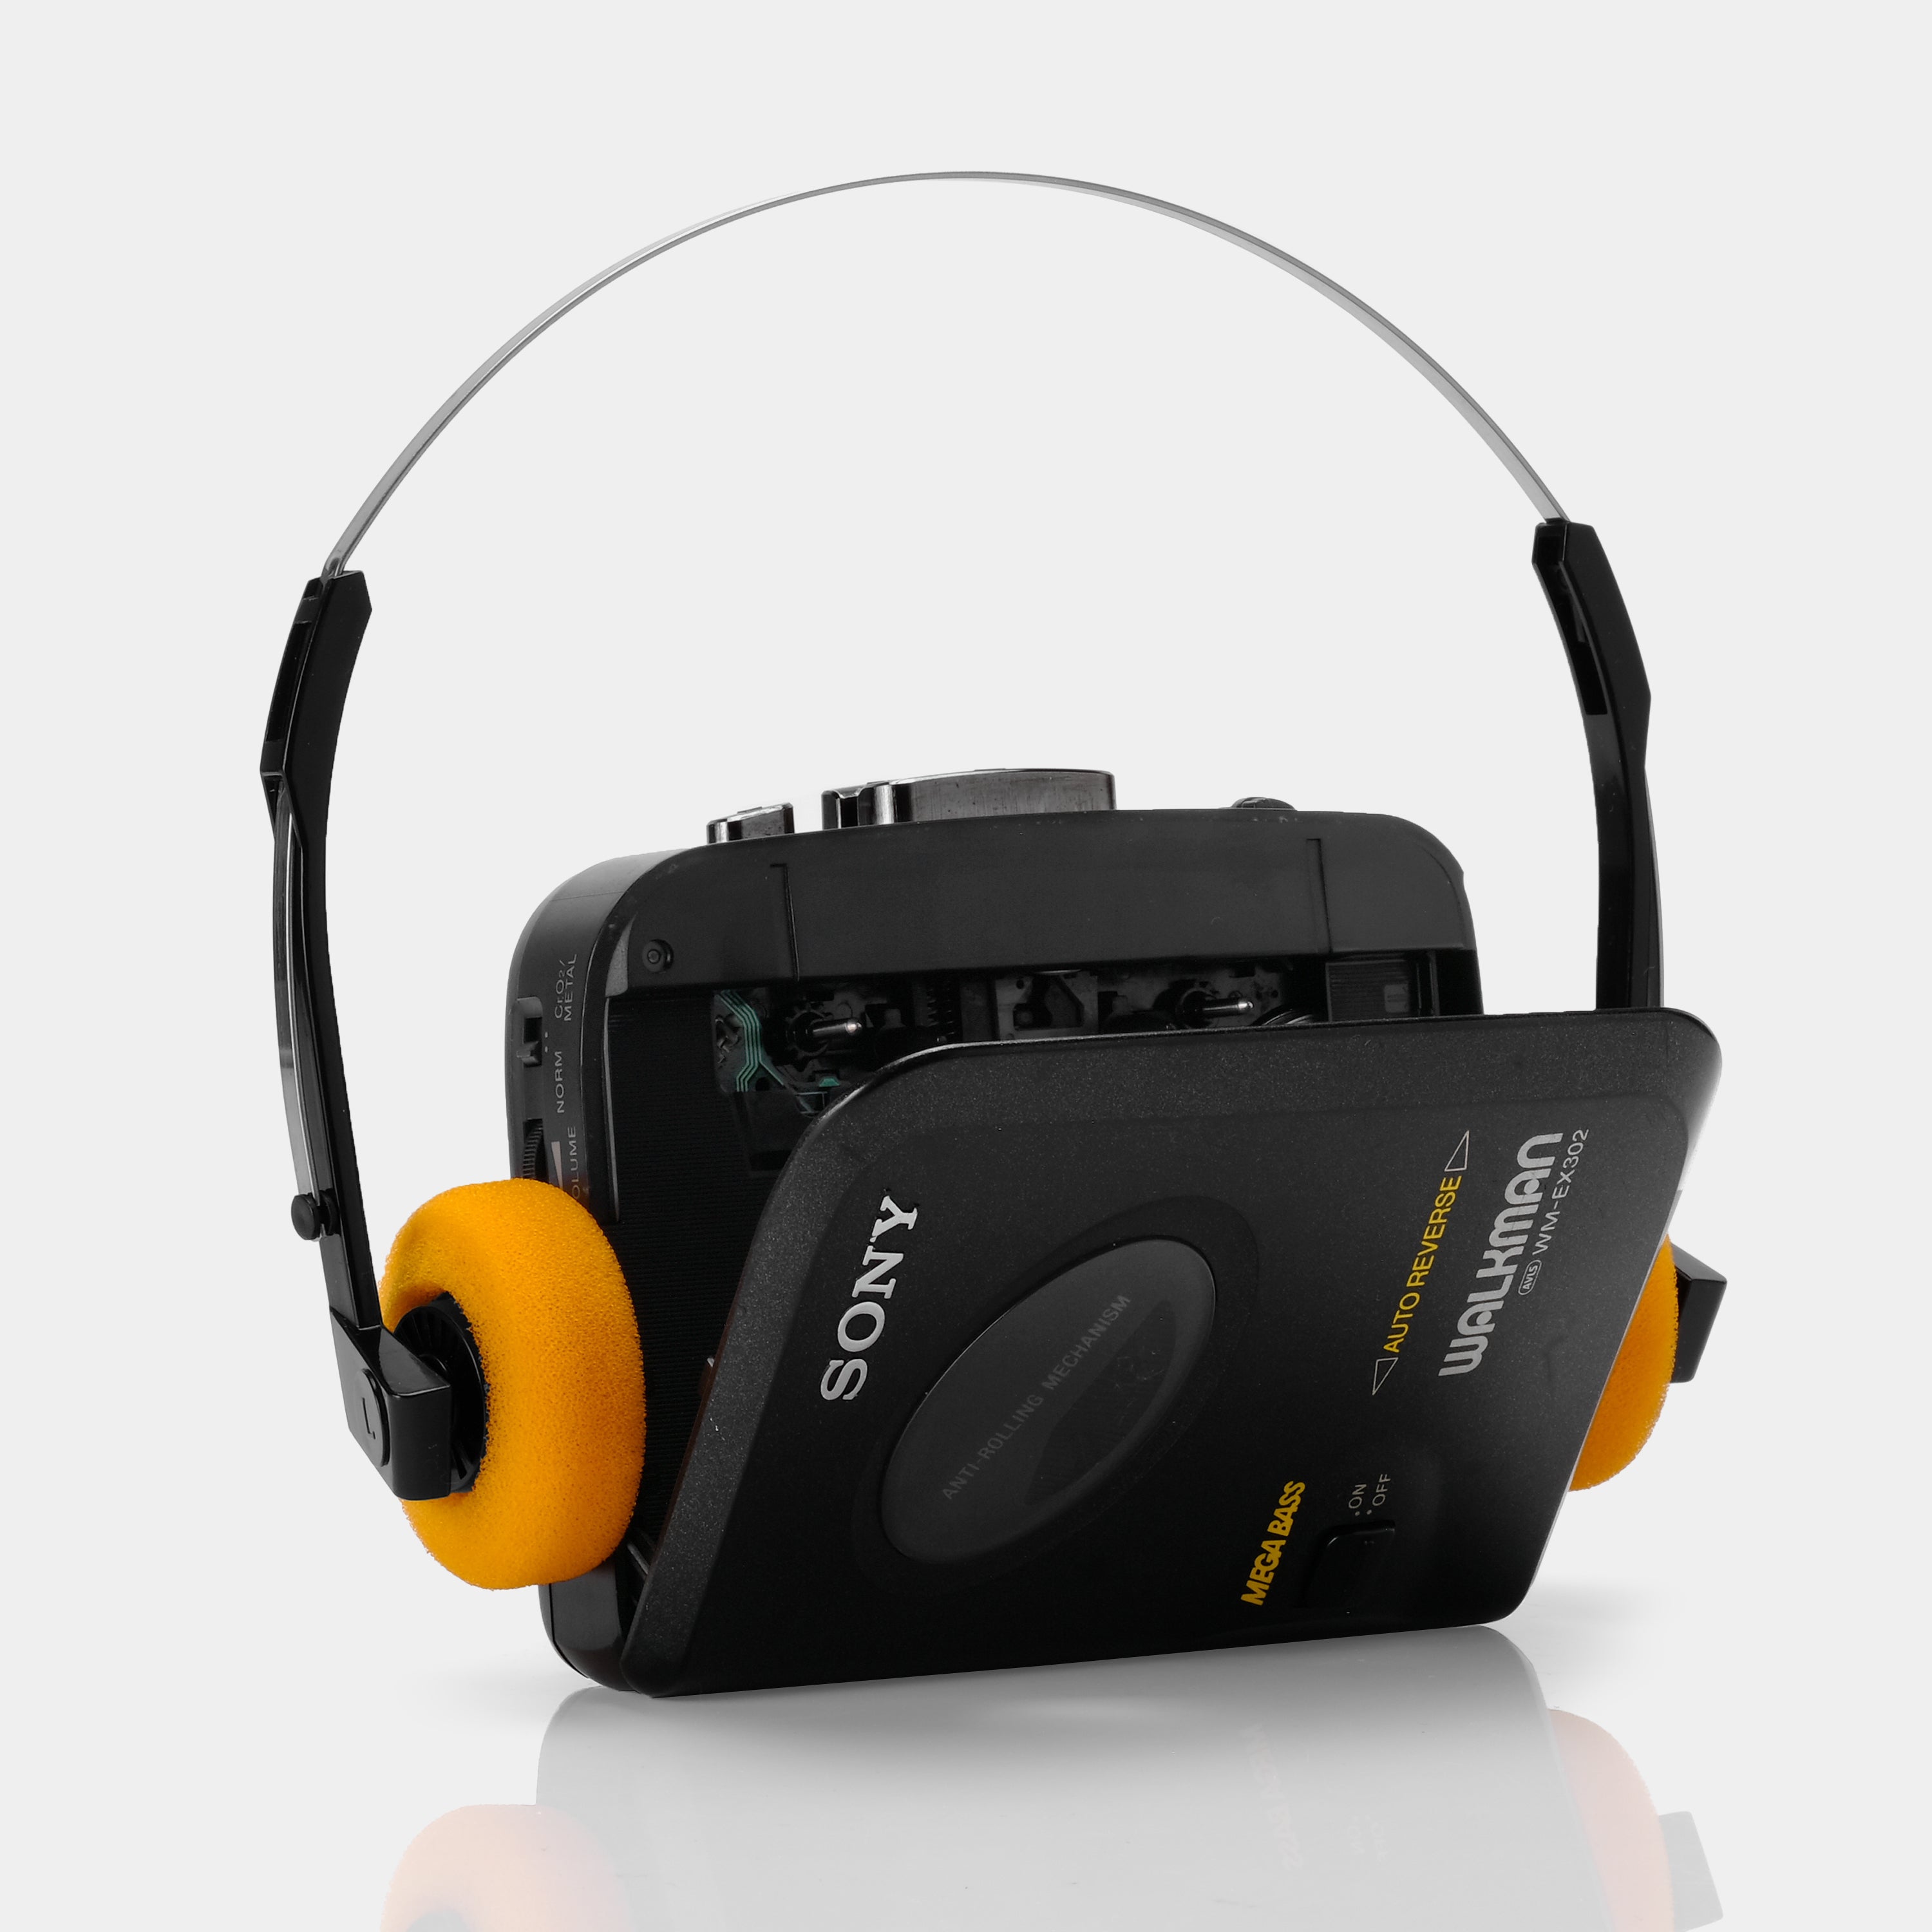 Sony Walkman WM-EX302 Auto Reverse AM/FM Portable Cassette Player